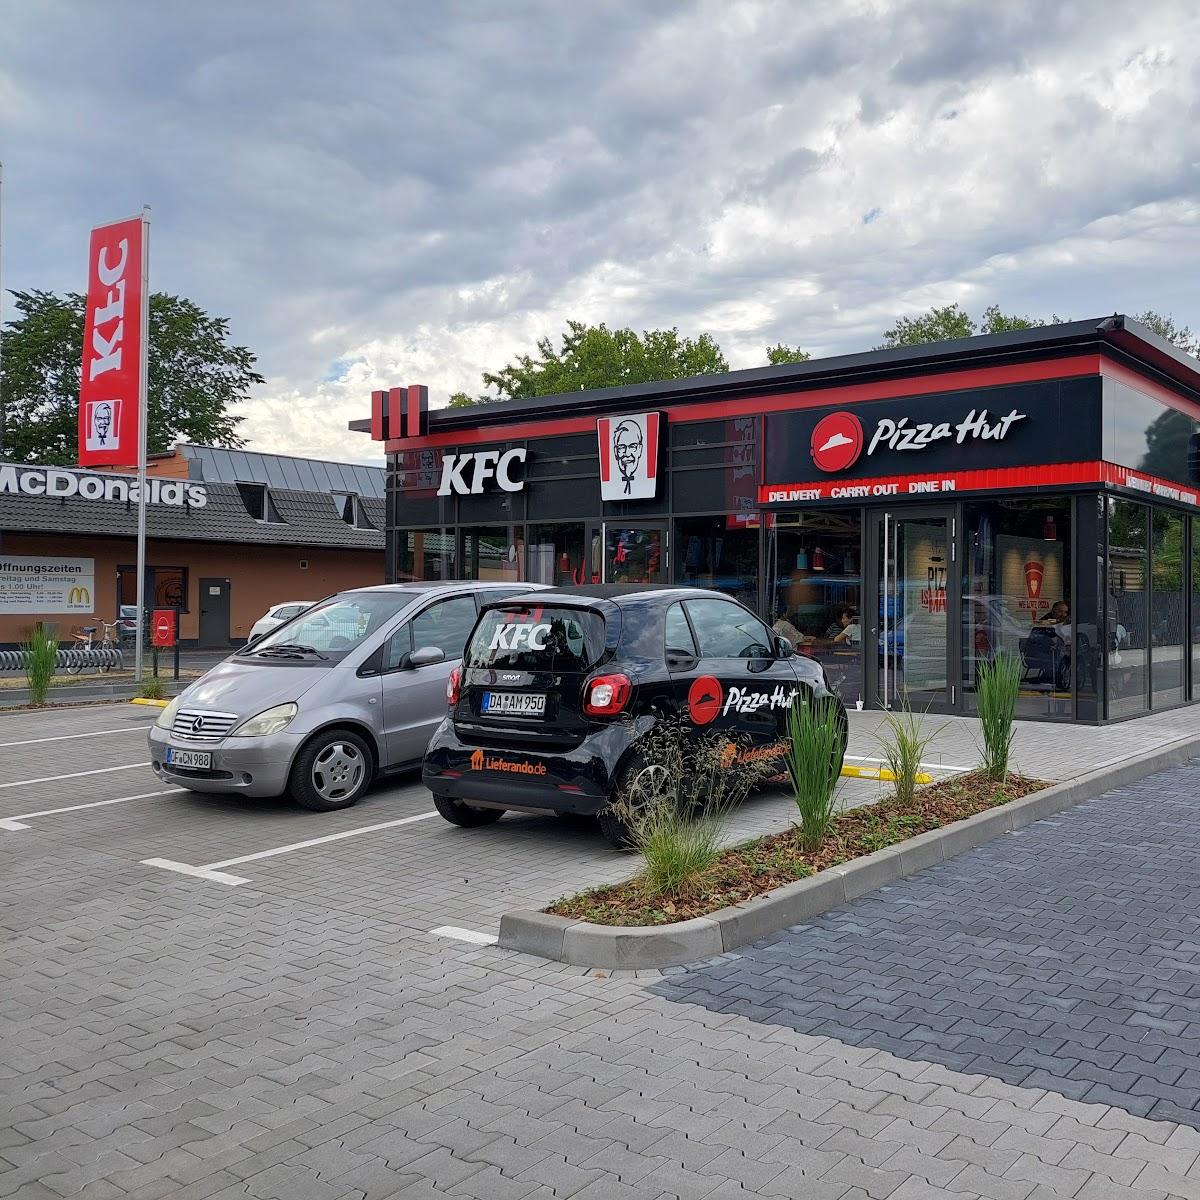 Restaurant "KFC" in Frankfurt am Main